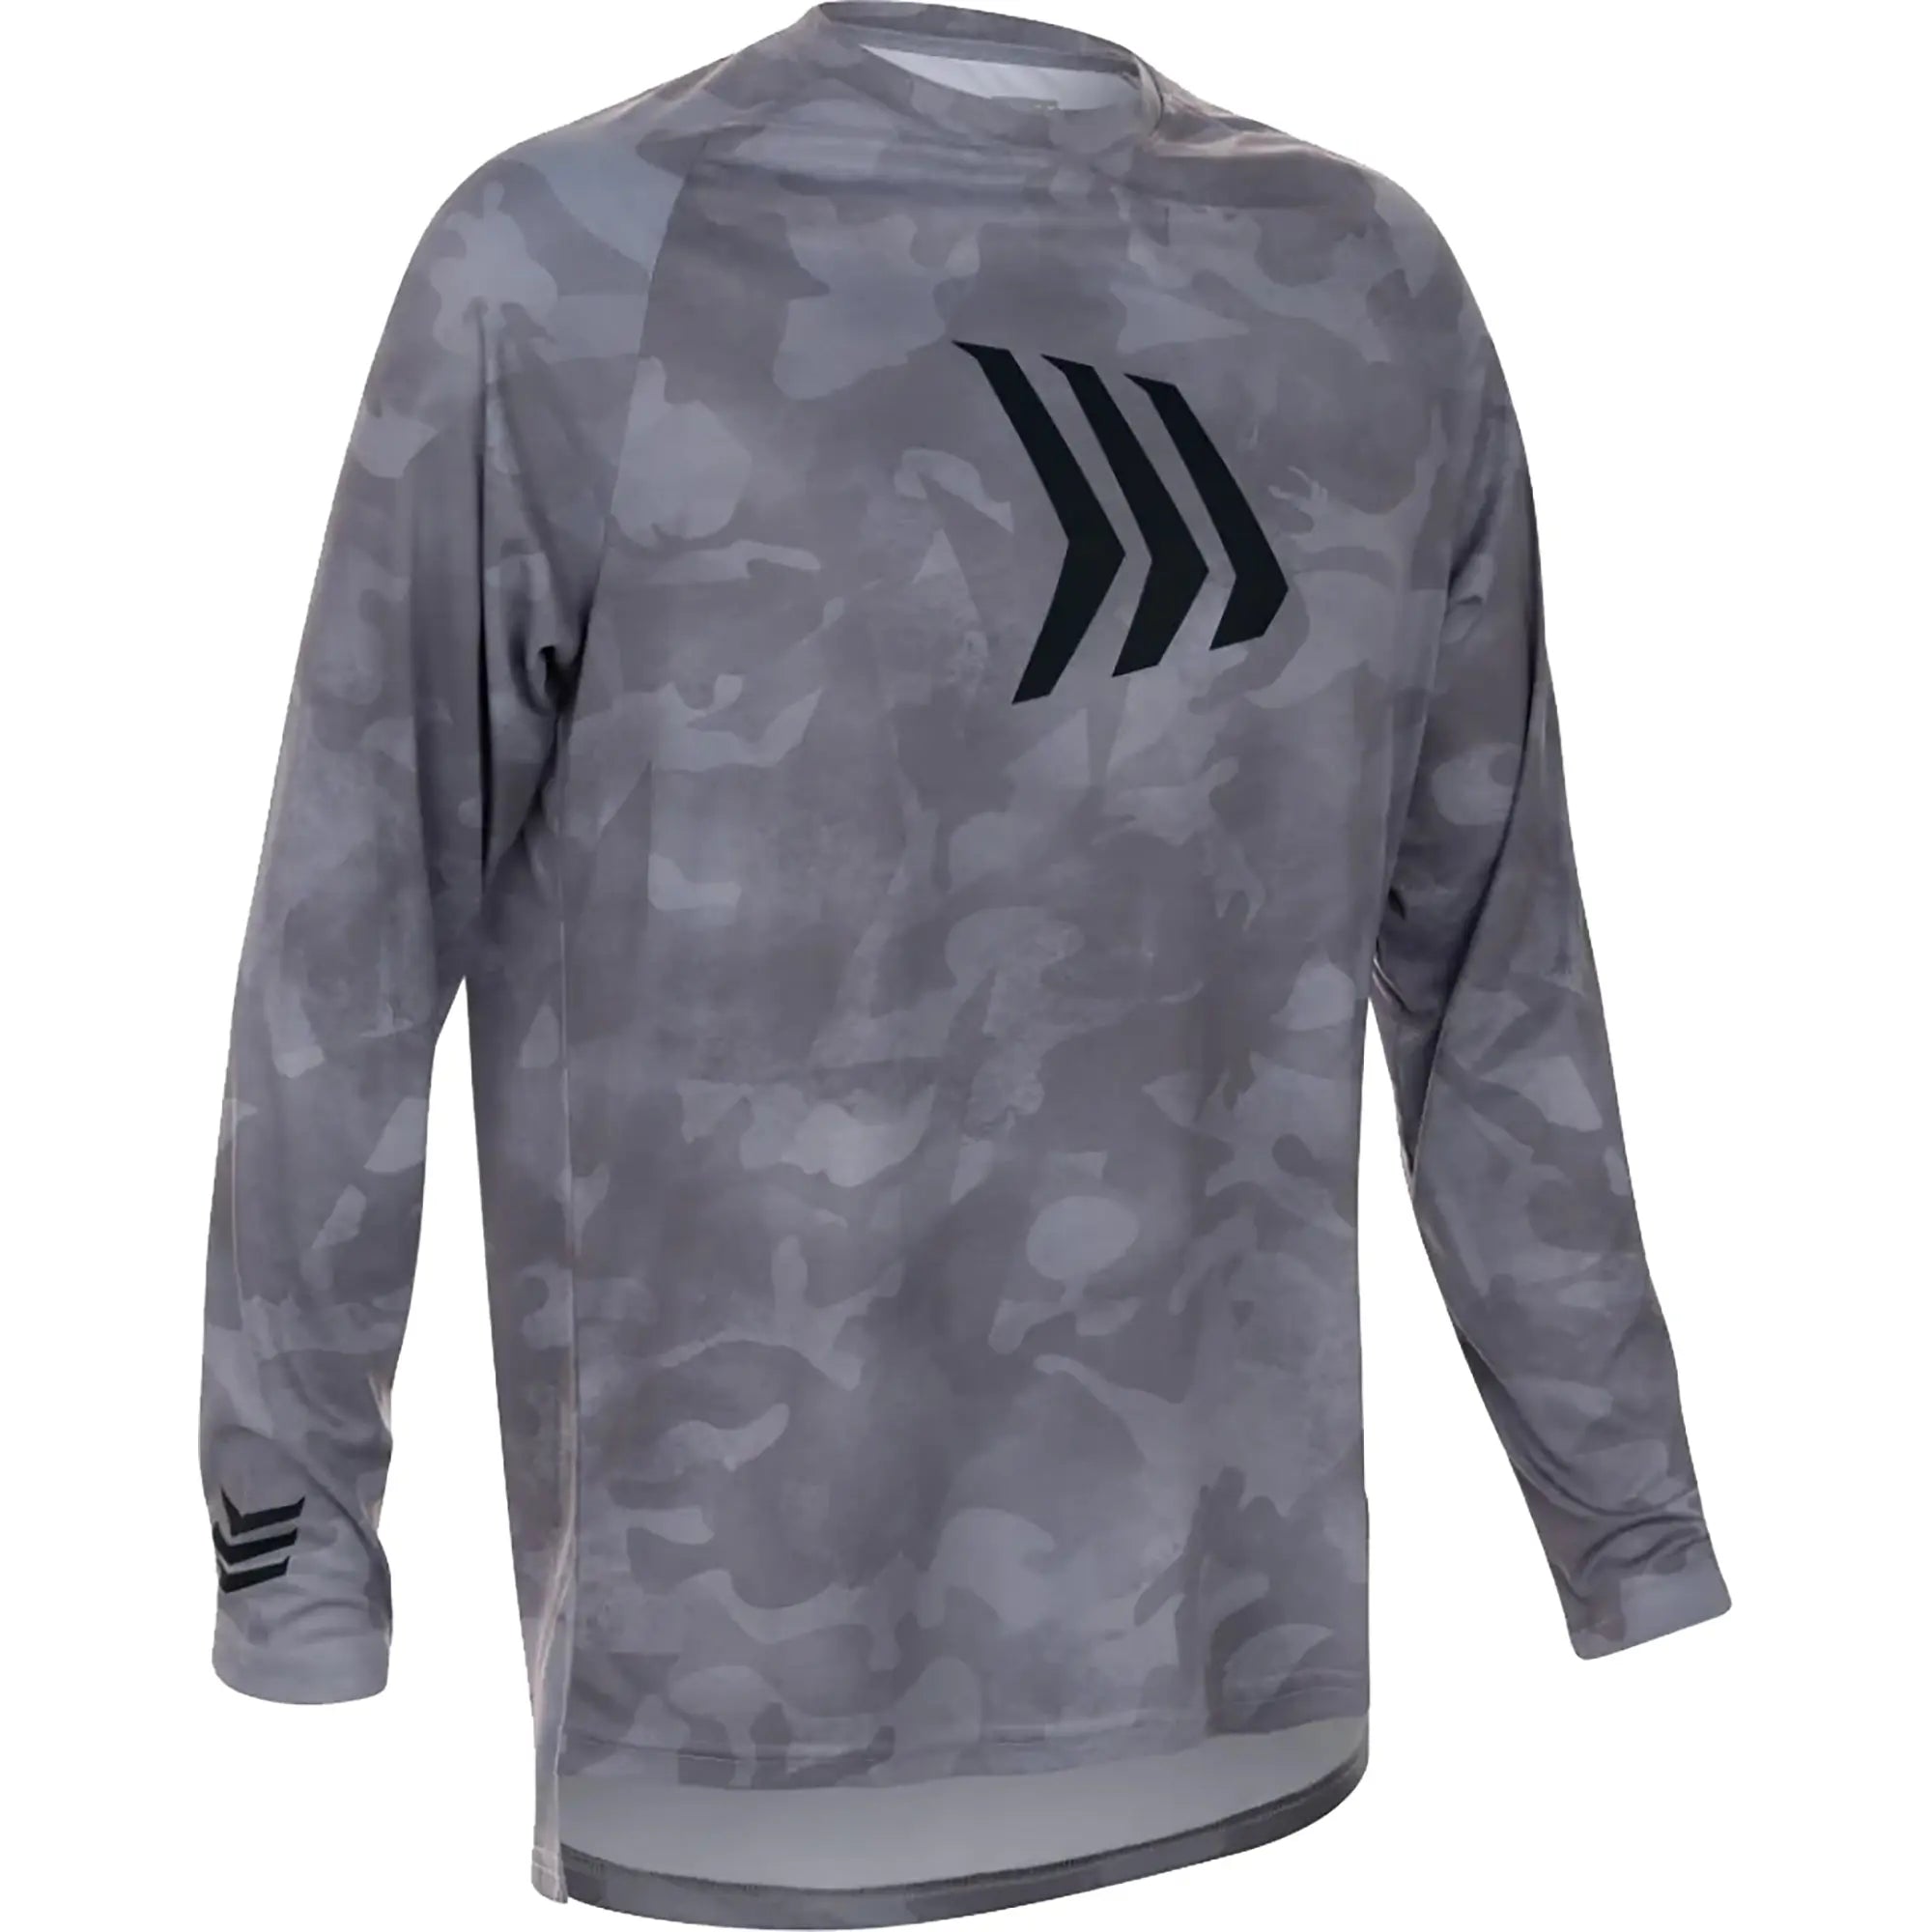 Gillz Contender Series Burnt UV Long Sleeve T-Shirt - Glacier Gray Gillz